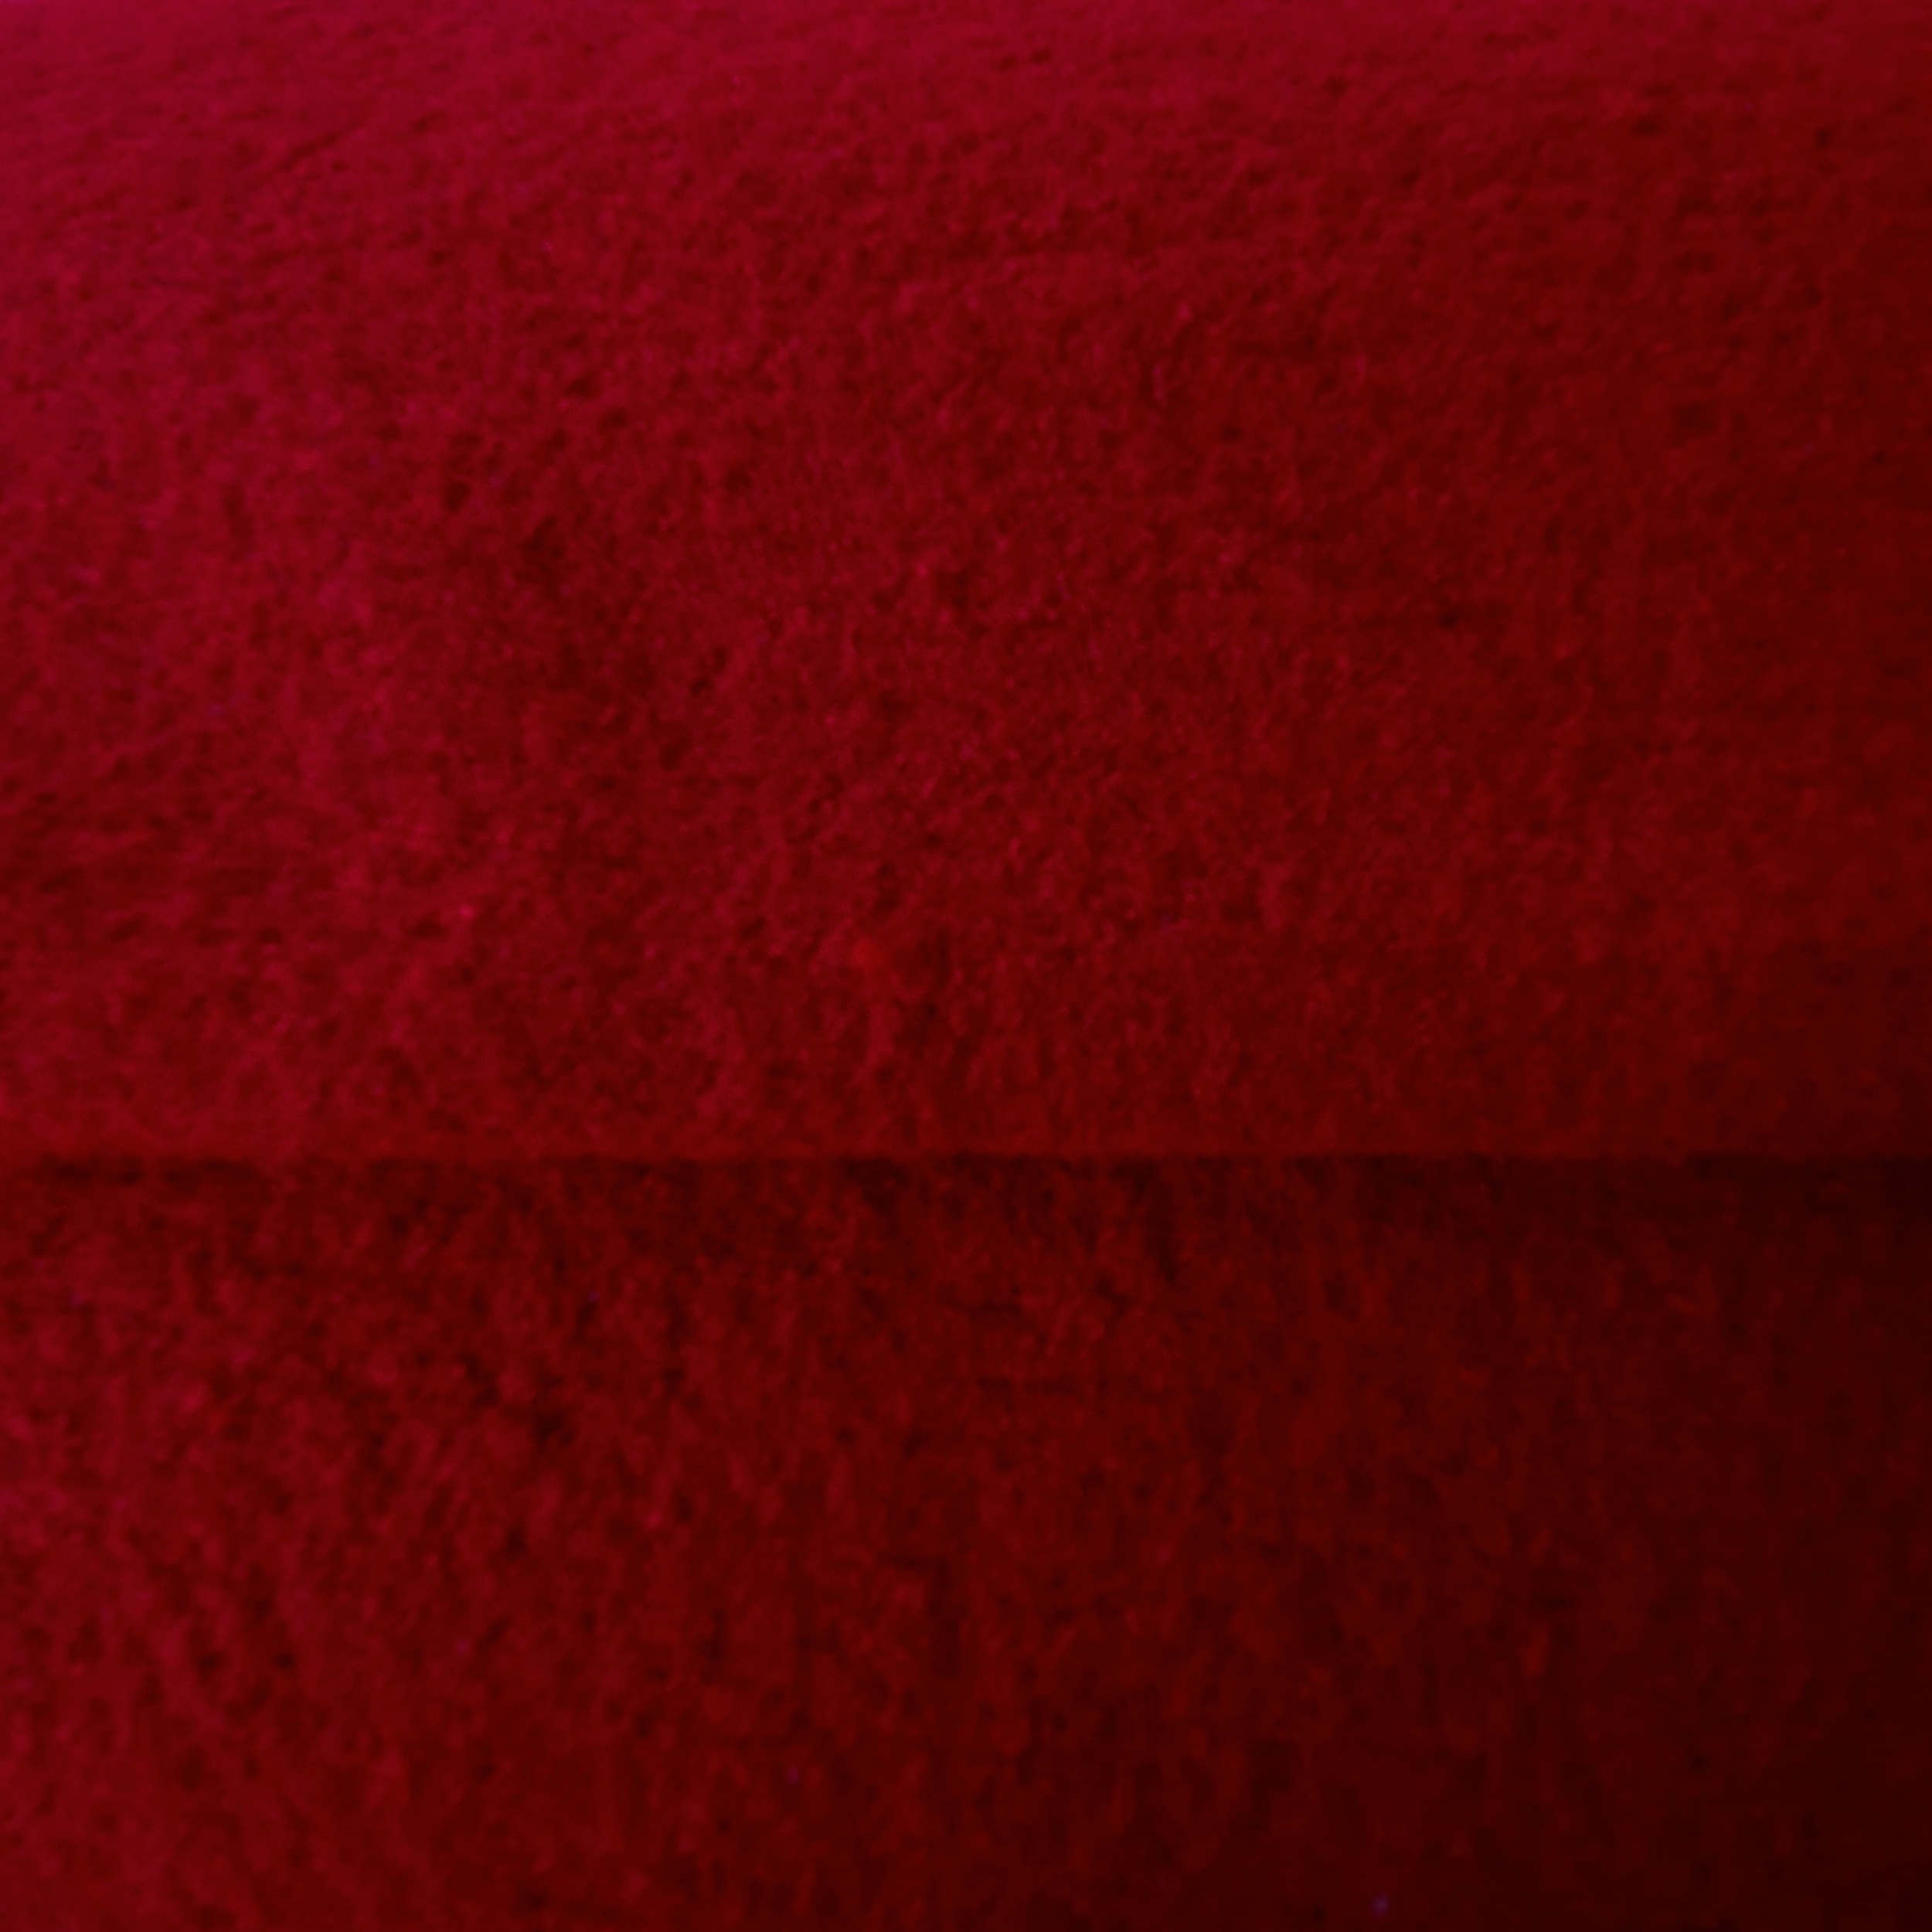 tissu laine bouillie rouge (1)